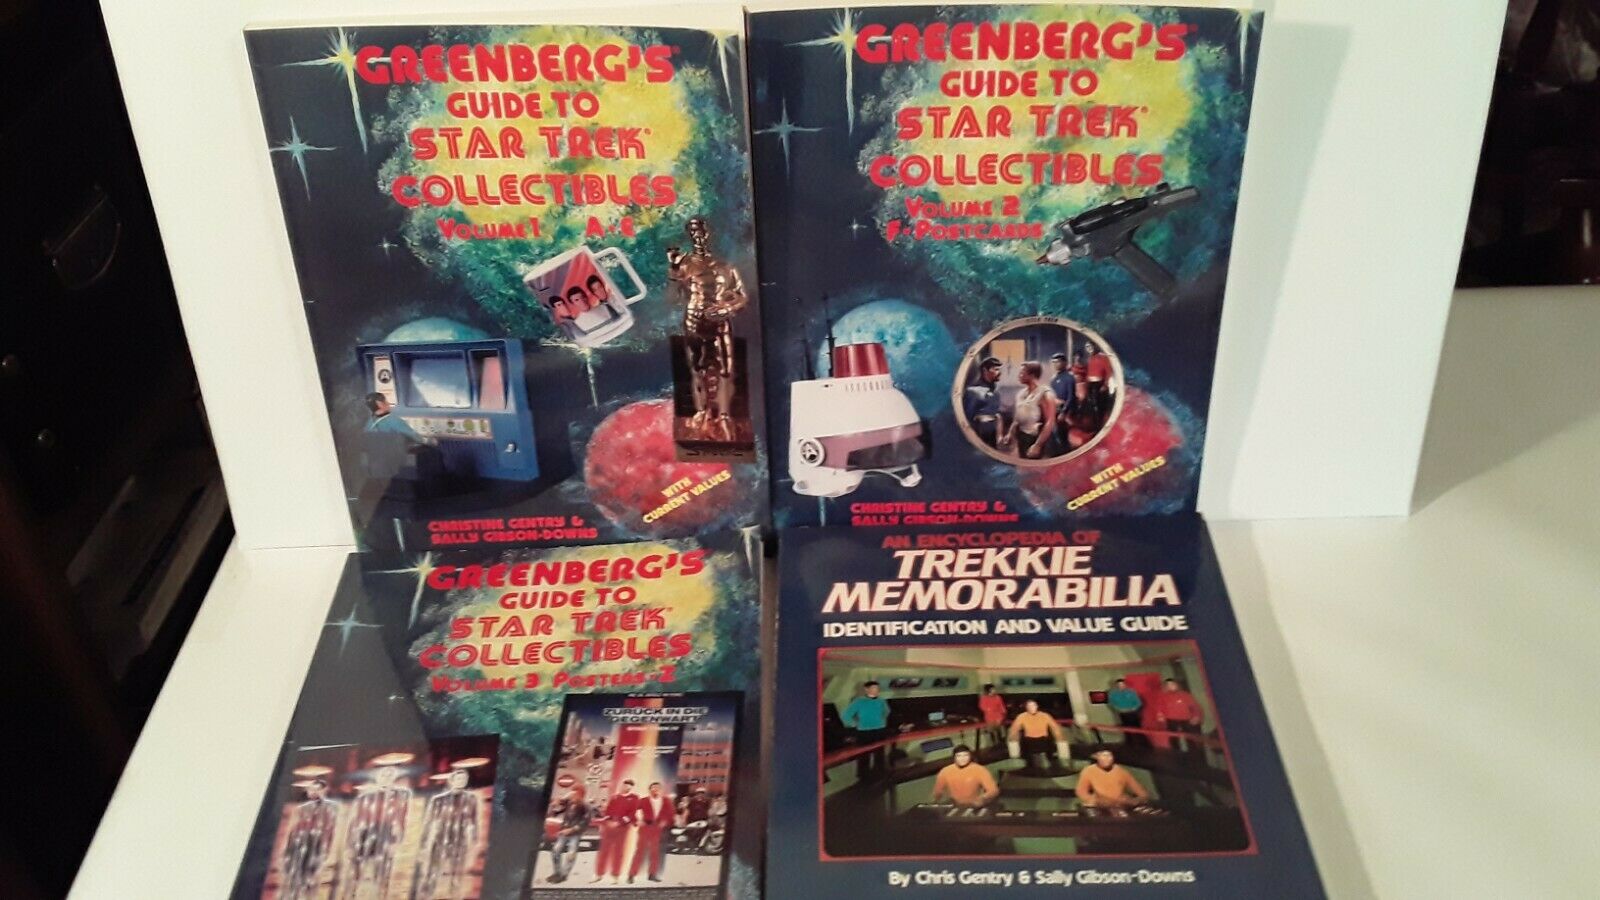 Star Trek Collectible Guides Trekkie Memorabilia And Greenberg’s Guide Vol. 1-3